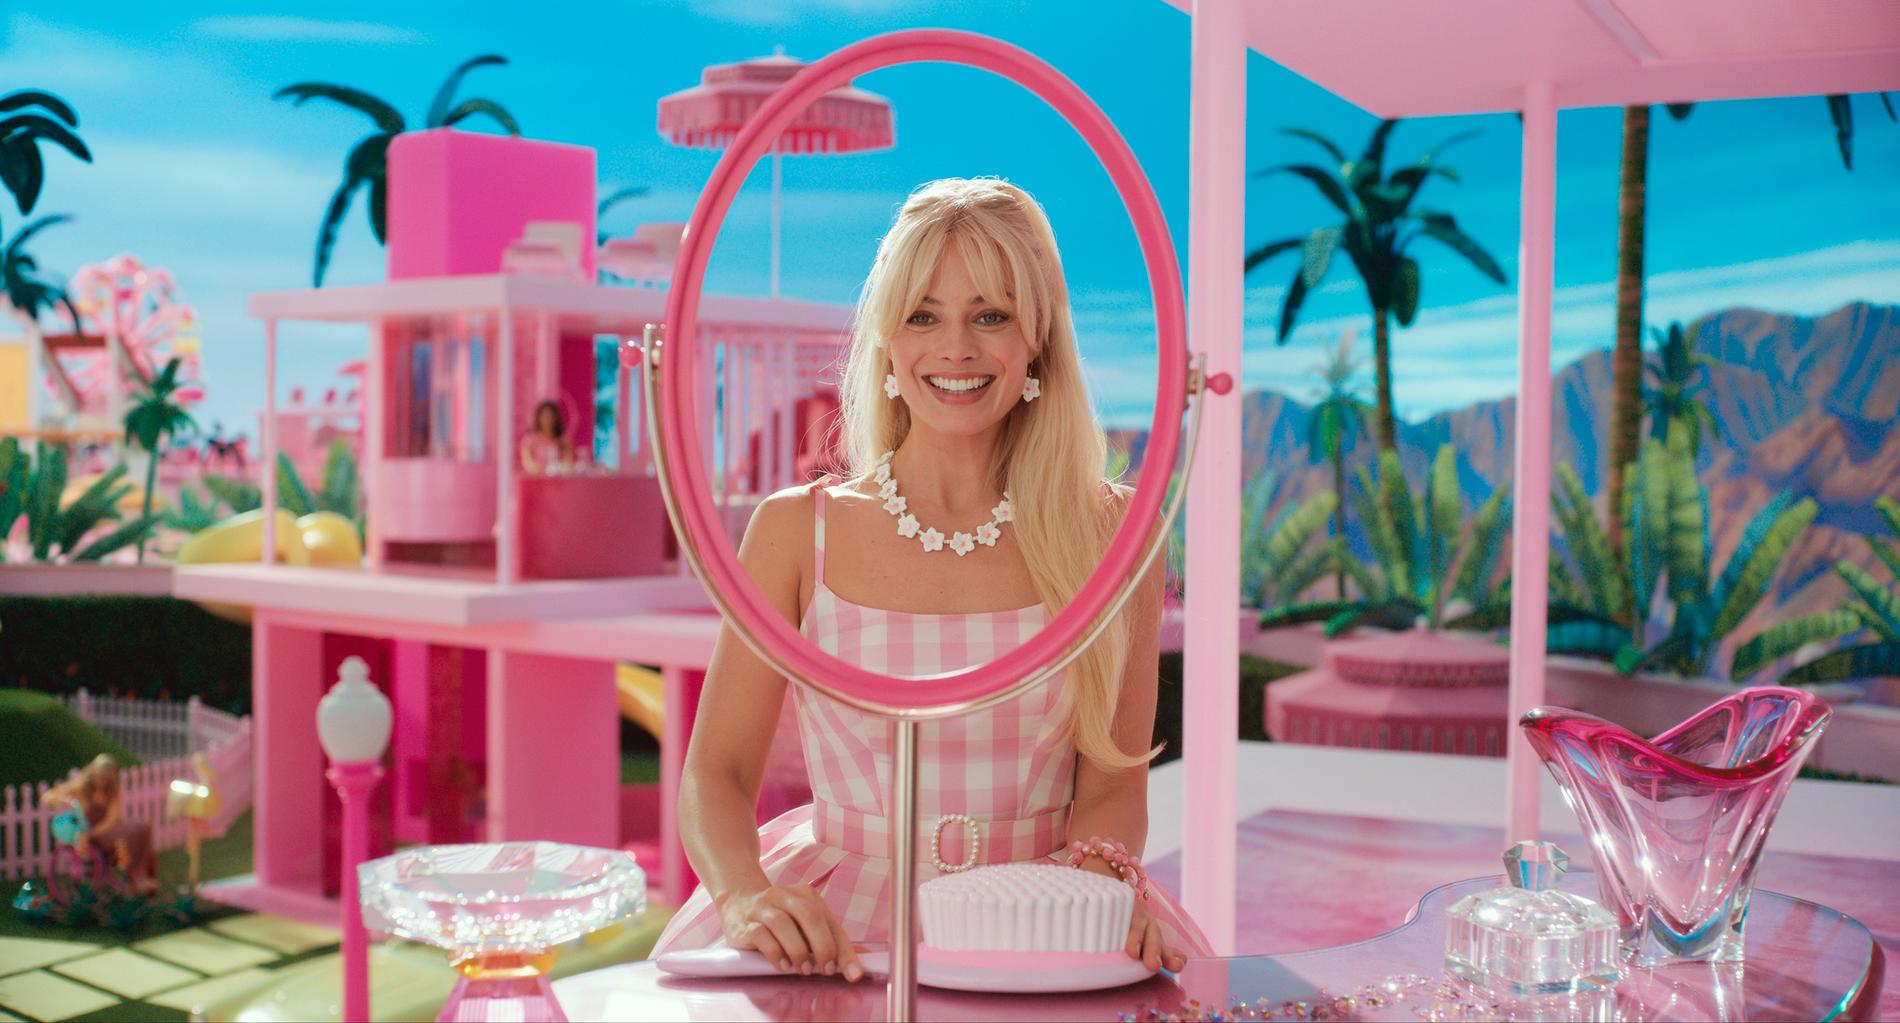 Margot Robbie spelar Barbie. Pressbild.